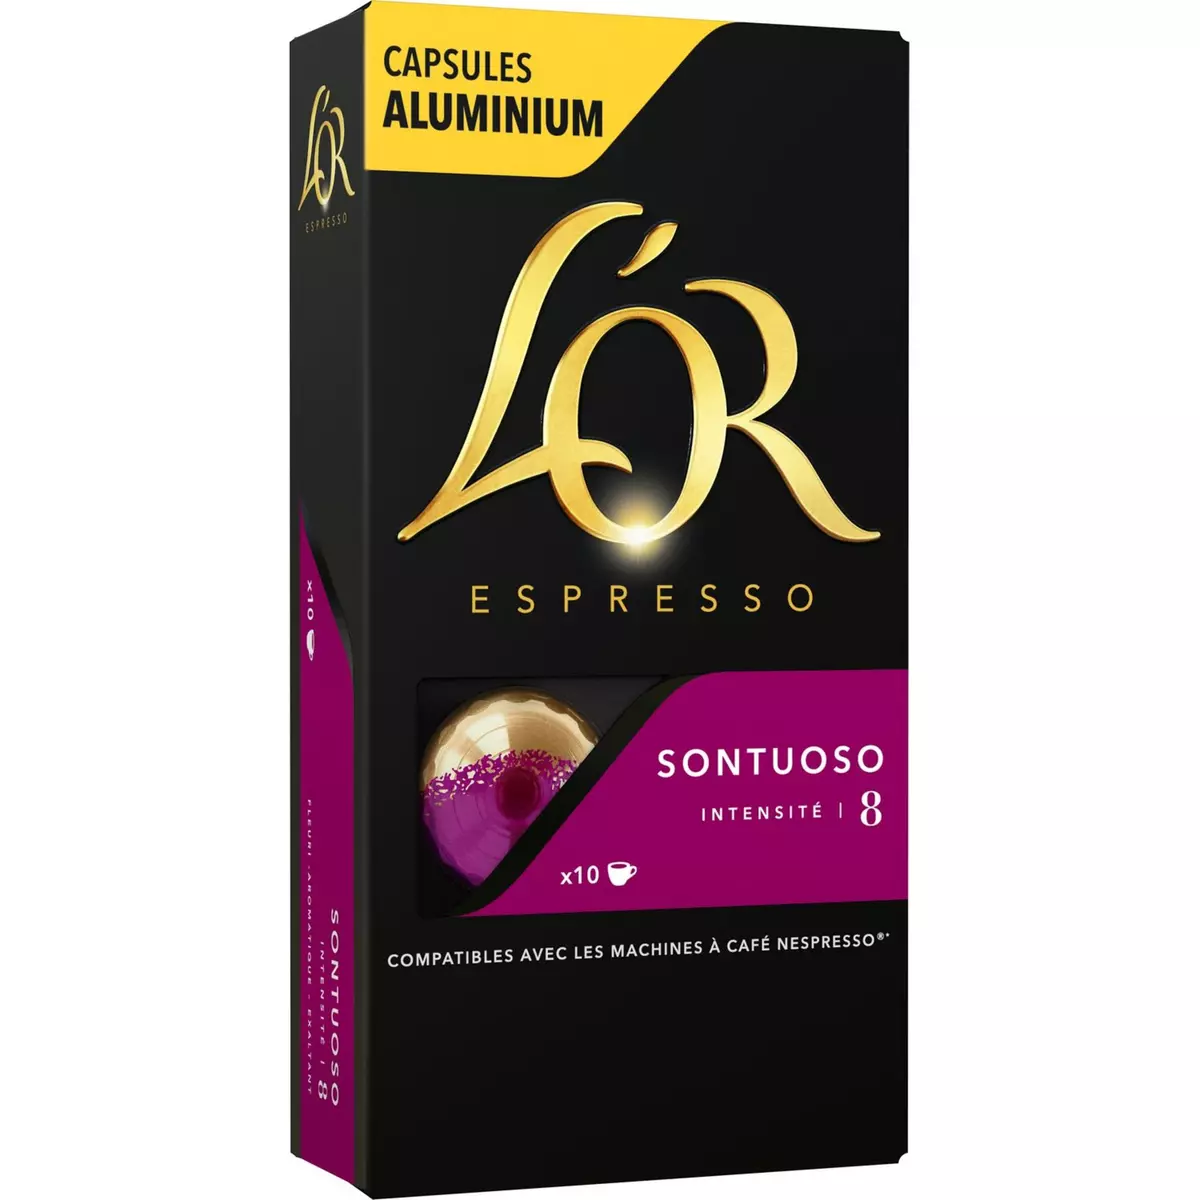 L'OR ESPRESSO Capsules de café sontuoso intensité 8 compatibles Nespresso 10 capsules 52g